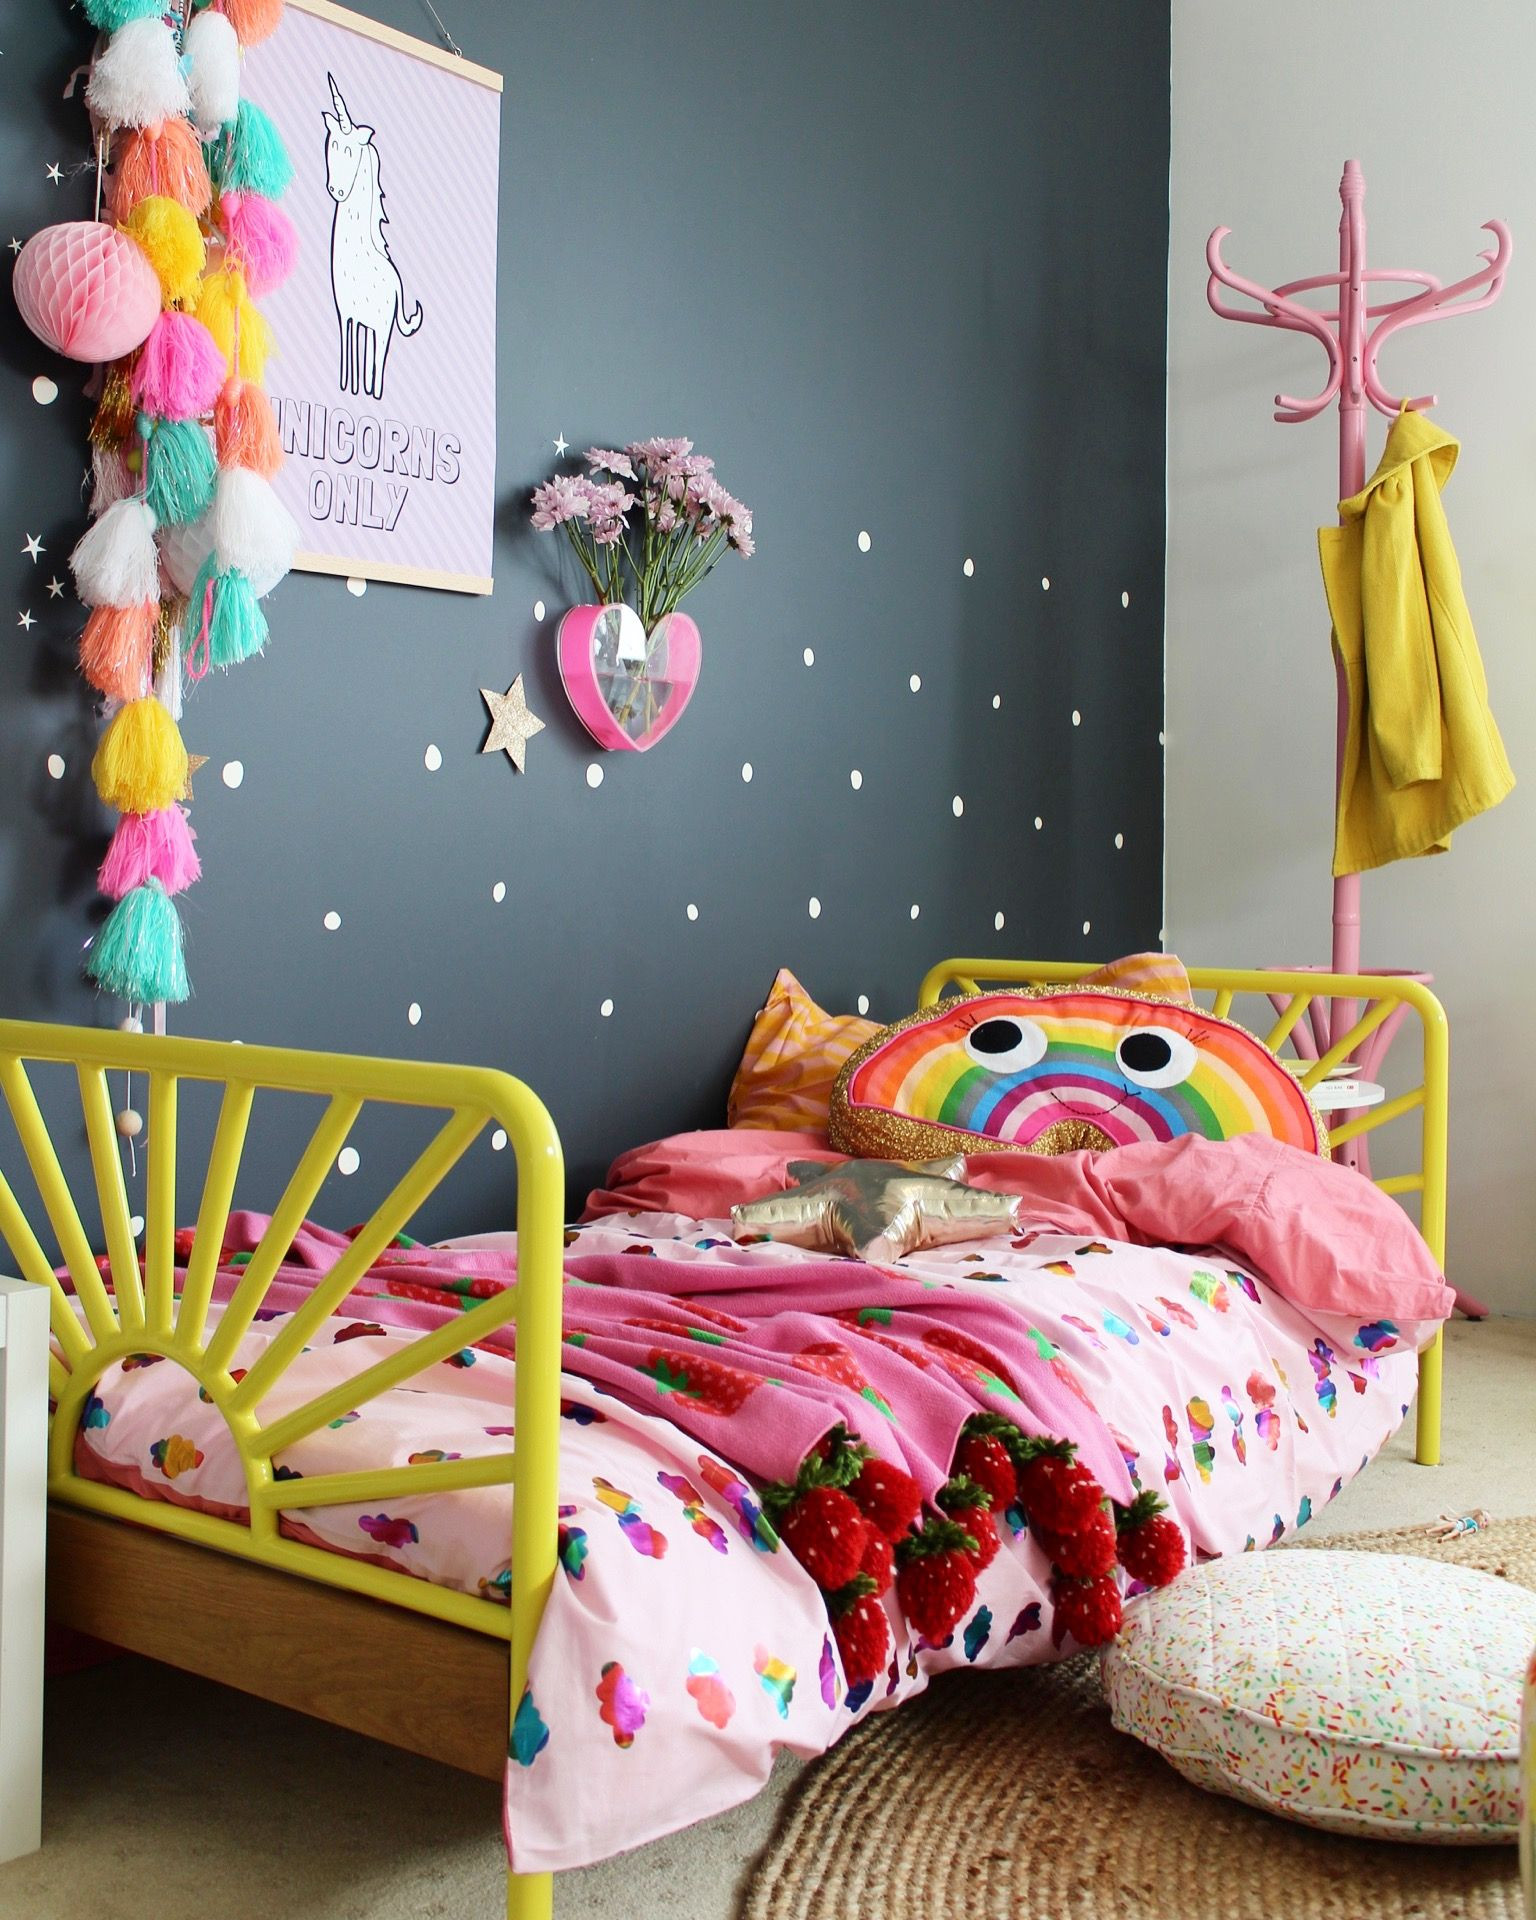 DIY Decor For Girls Room
 25 Amazing Girls Room Decor Ideas for Teenagers